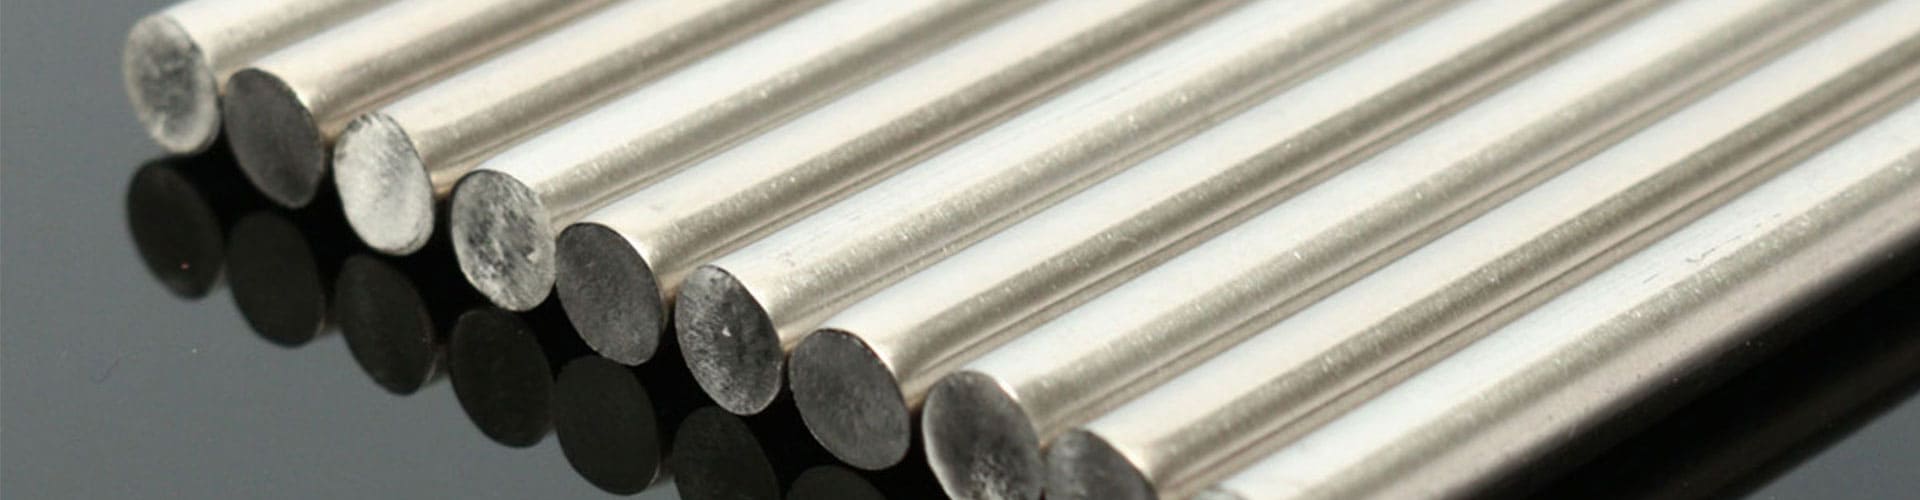 nickel-alloy-201-round-bars-rods-manufacturer-exporter-supplier-in-dubai